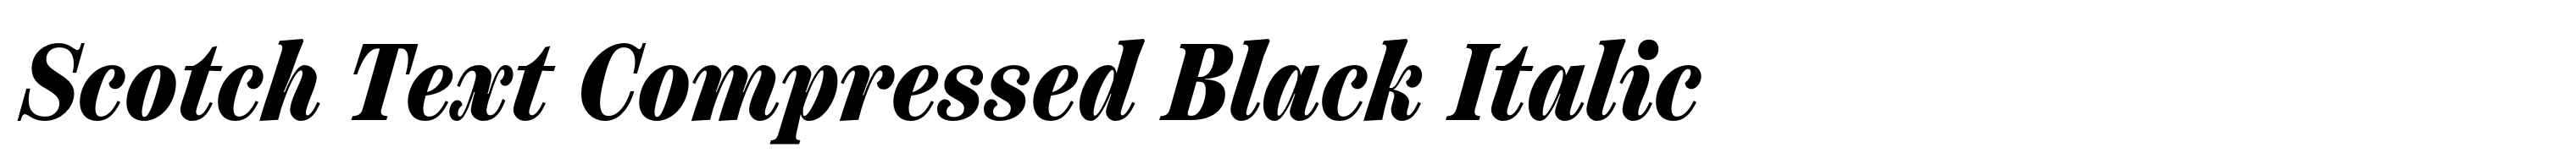 Scotch Text Compressed Black Italic